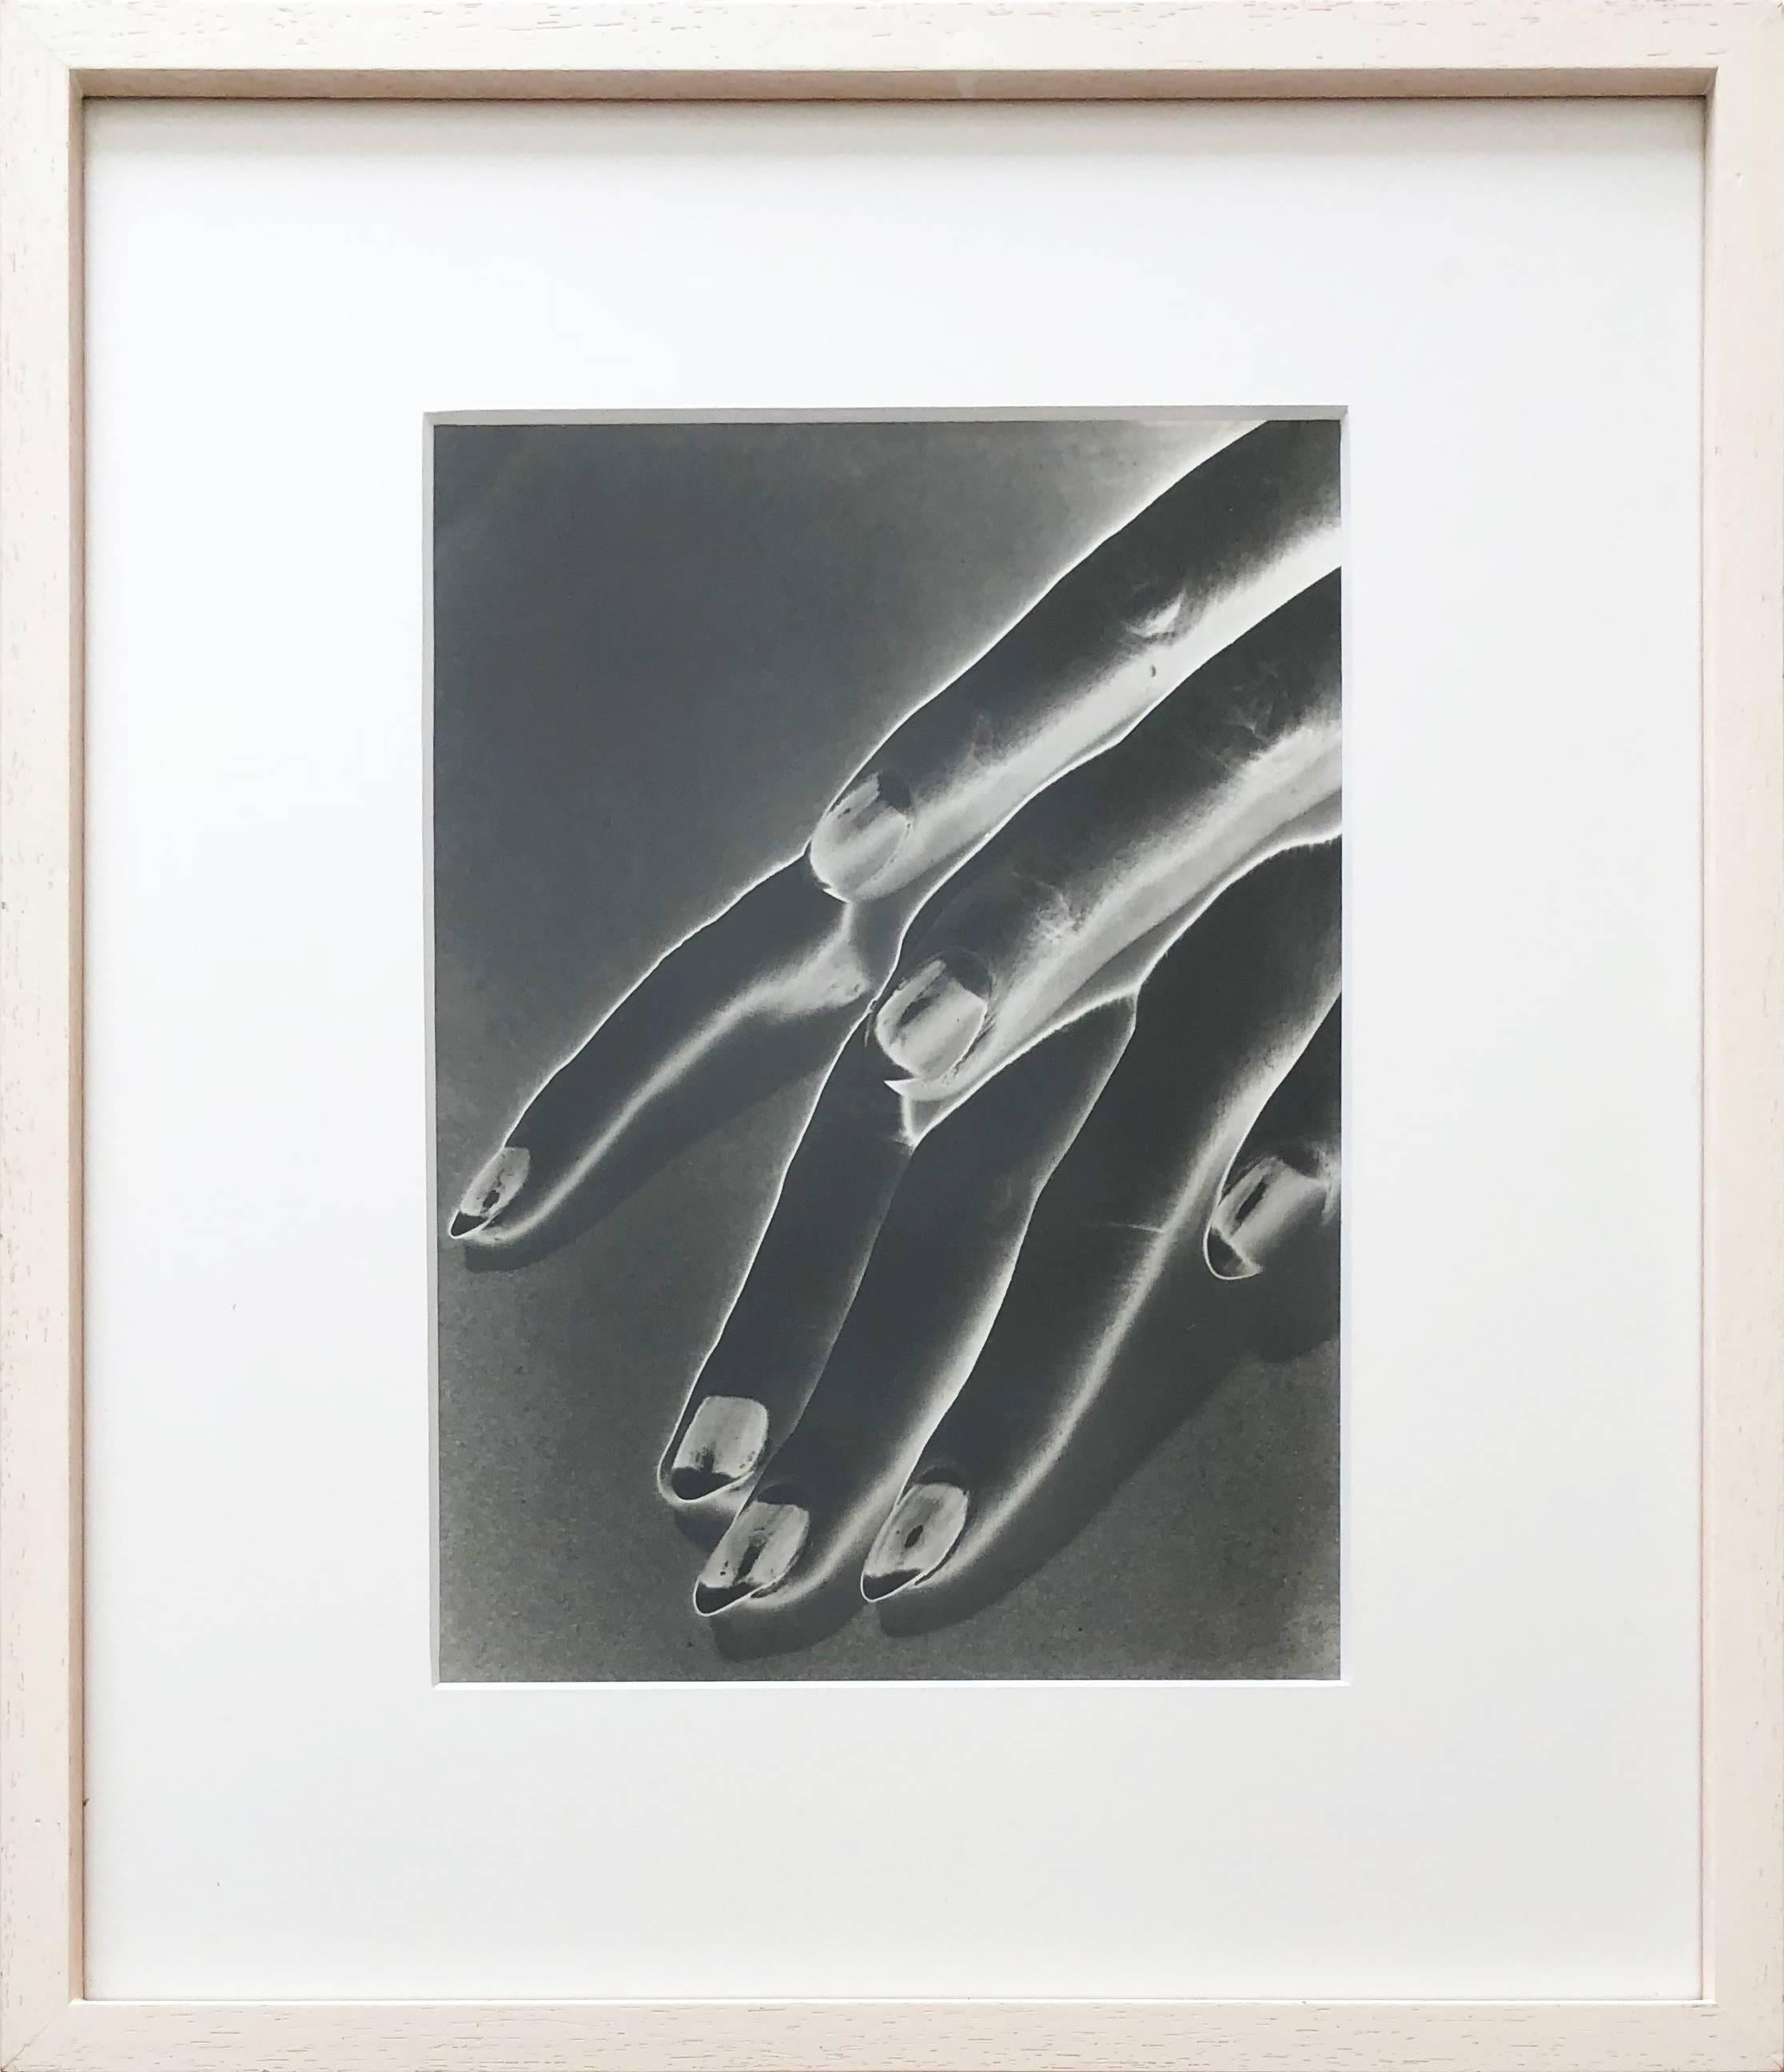 Man Ray Portrait Photograph - Study of Hands, Negative Solarization print, Framed